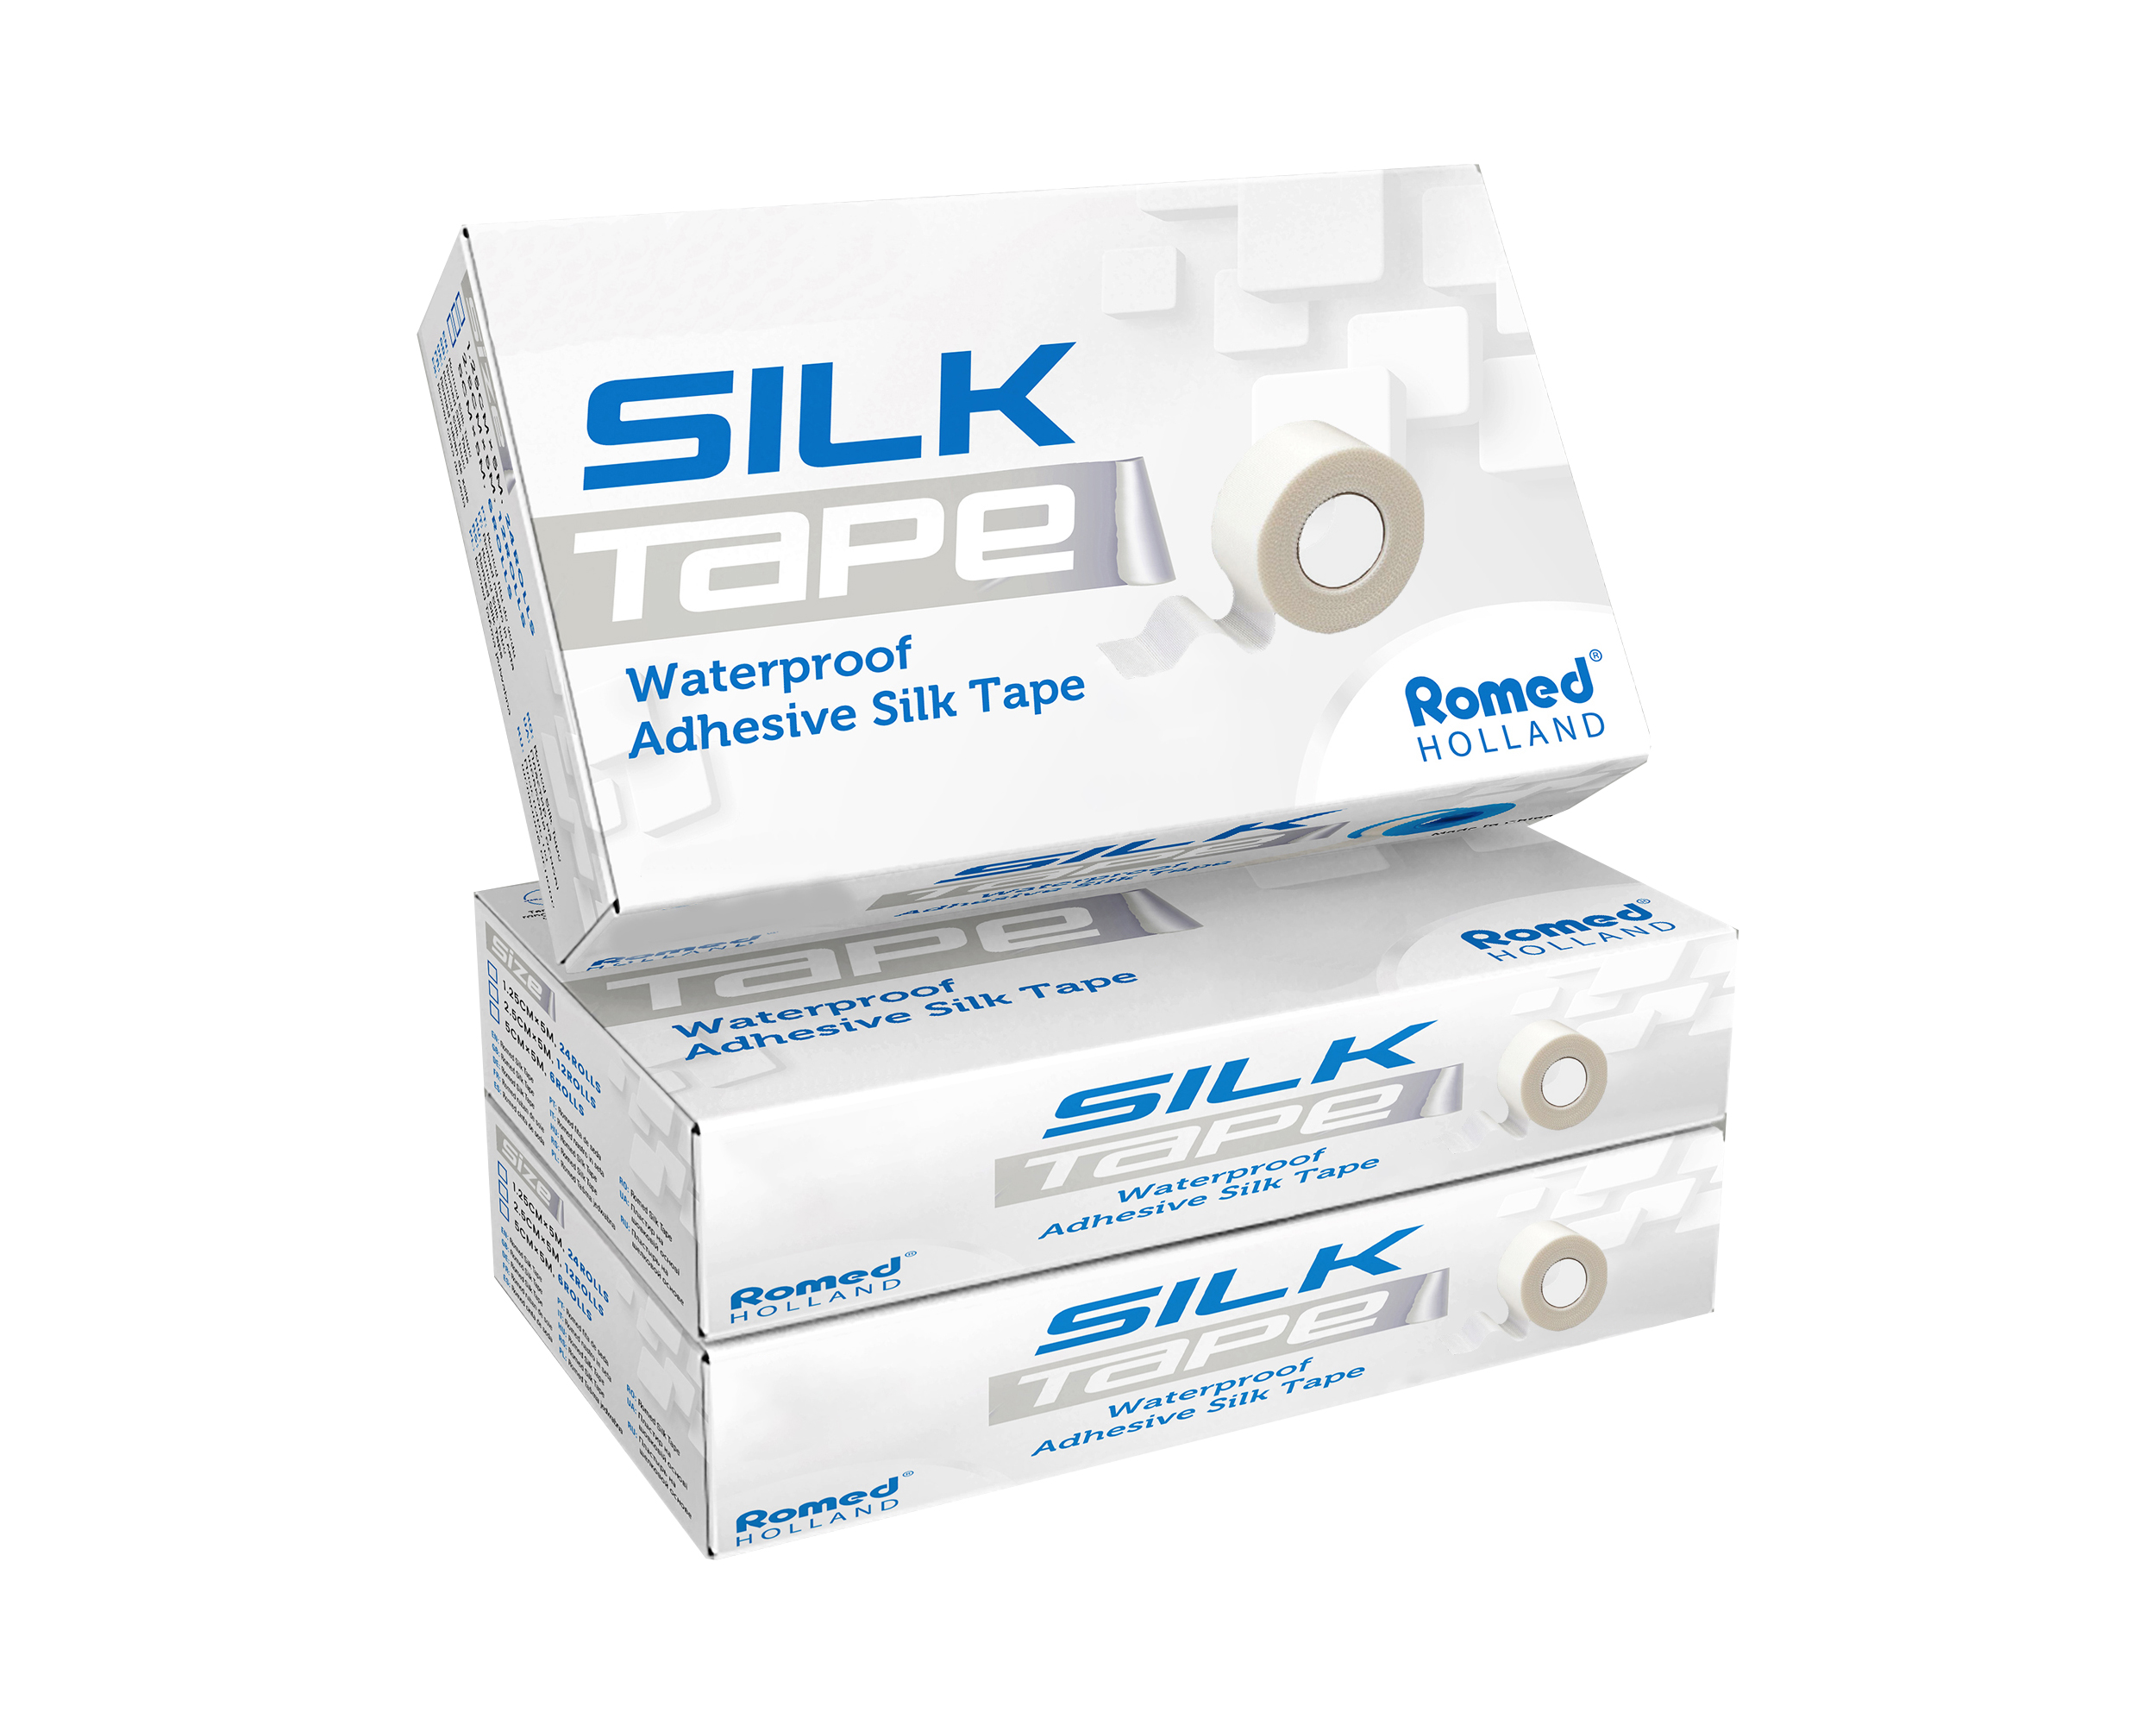 ST-5 Romed Adhesive Silk Tape, 5cm x 5m, soft easy-tear, waterproof, 6 rolls in an innerbox, 180 rolls per carton.